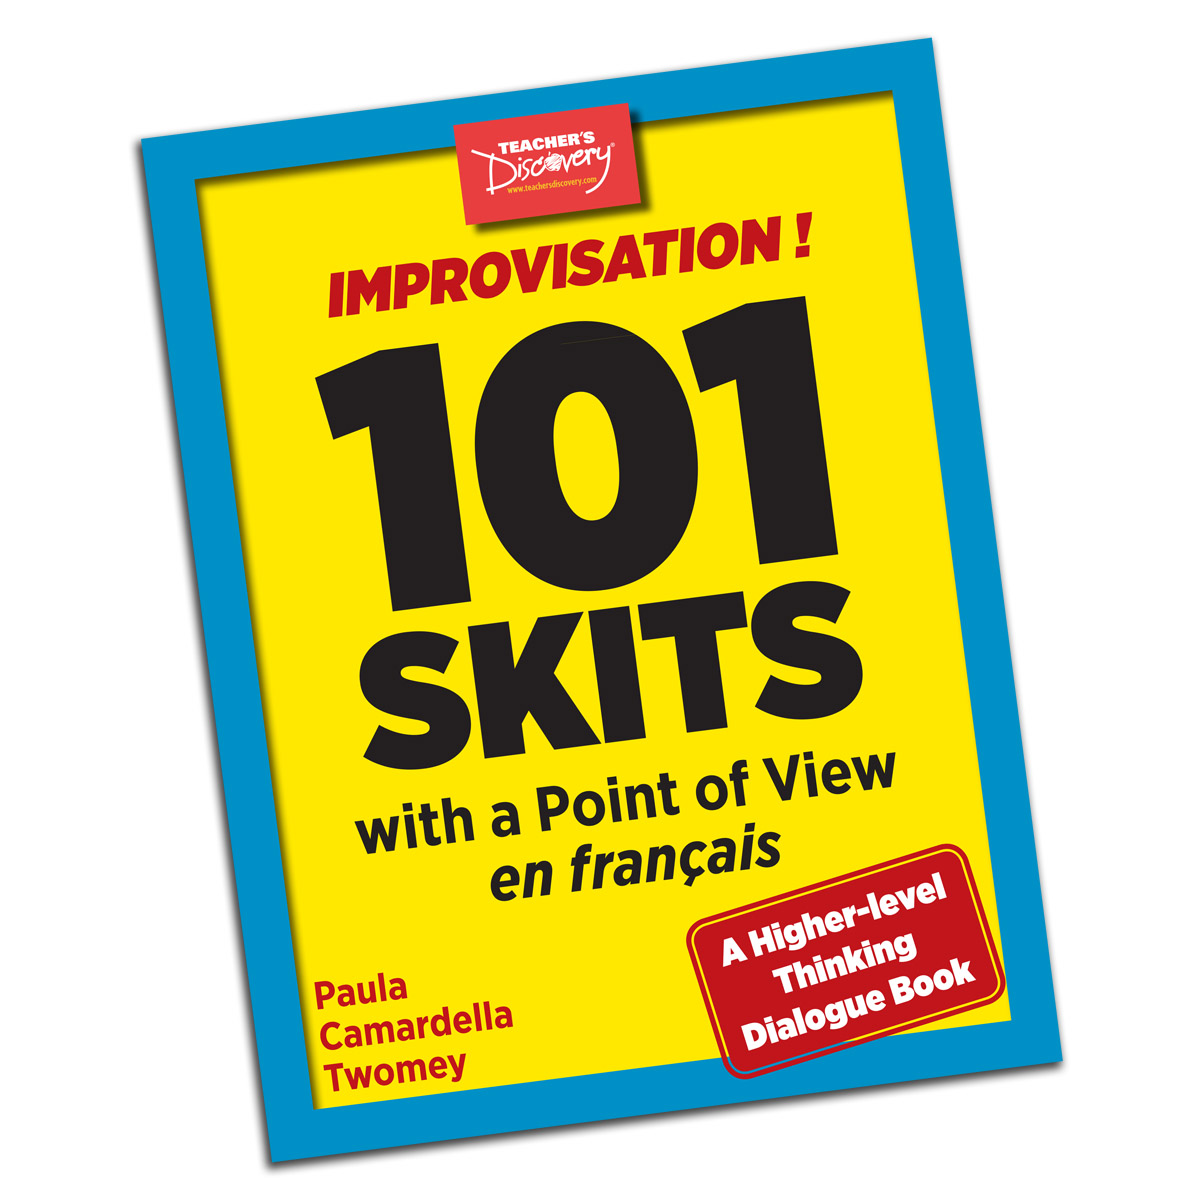 Improvisation ! 101 Skits with a Point of View en français Book